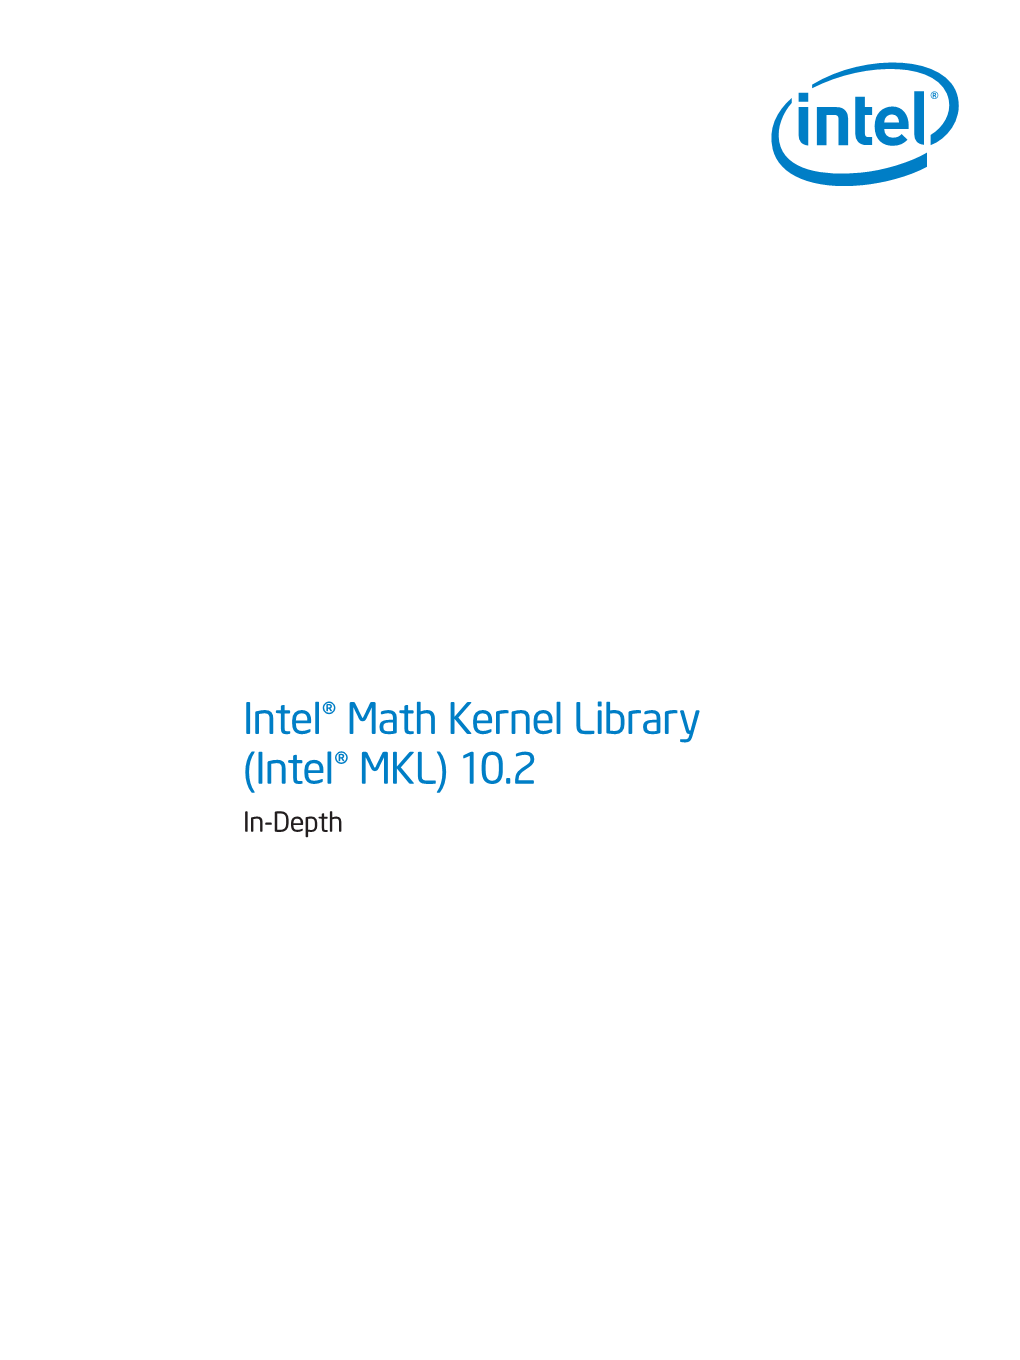 Intel® Math Kernel Library (Intel® MKL) 10.2 In-Depth Intel® Math Kernel Library (Intel® MKL) 10.2: In-Depth